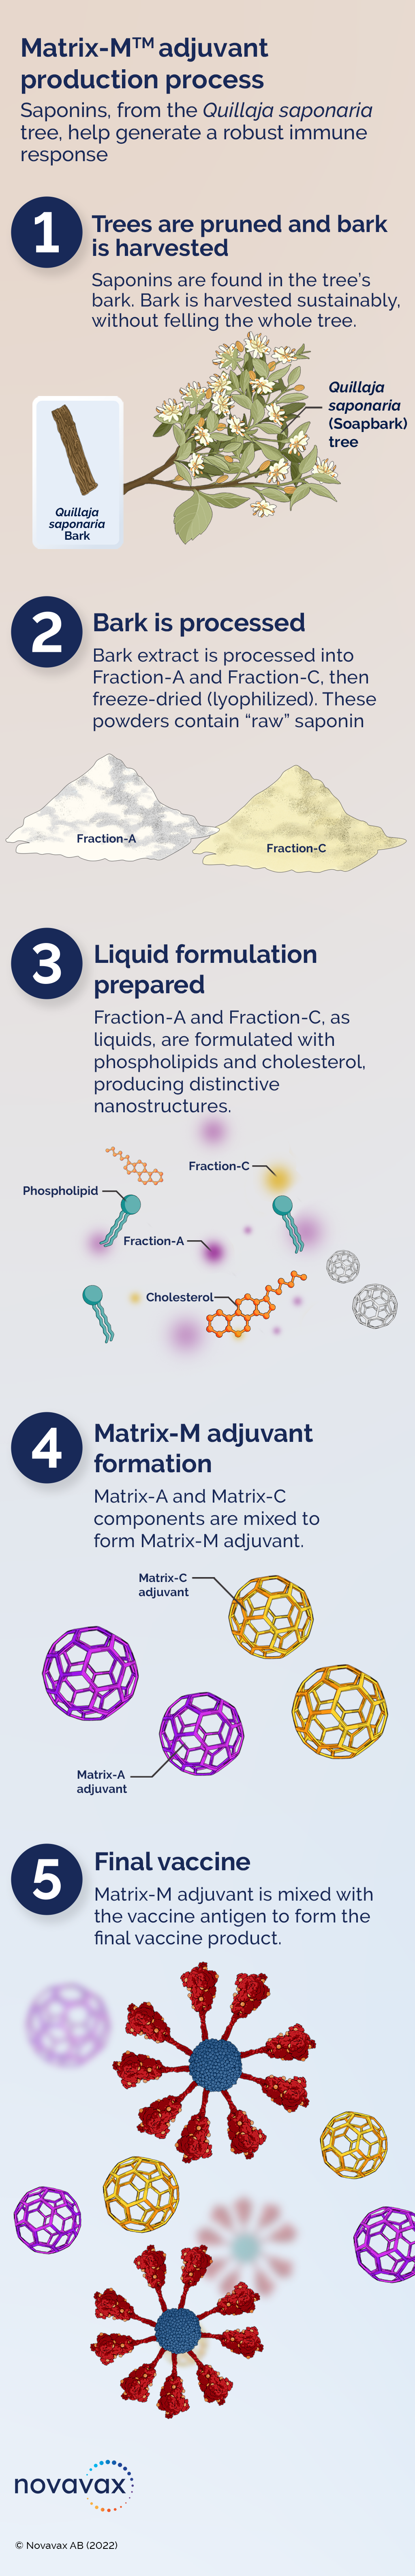 Infographic displaying the Matrix-M adjuvant production process